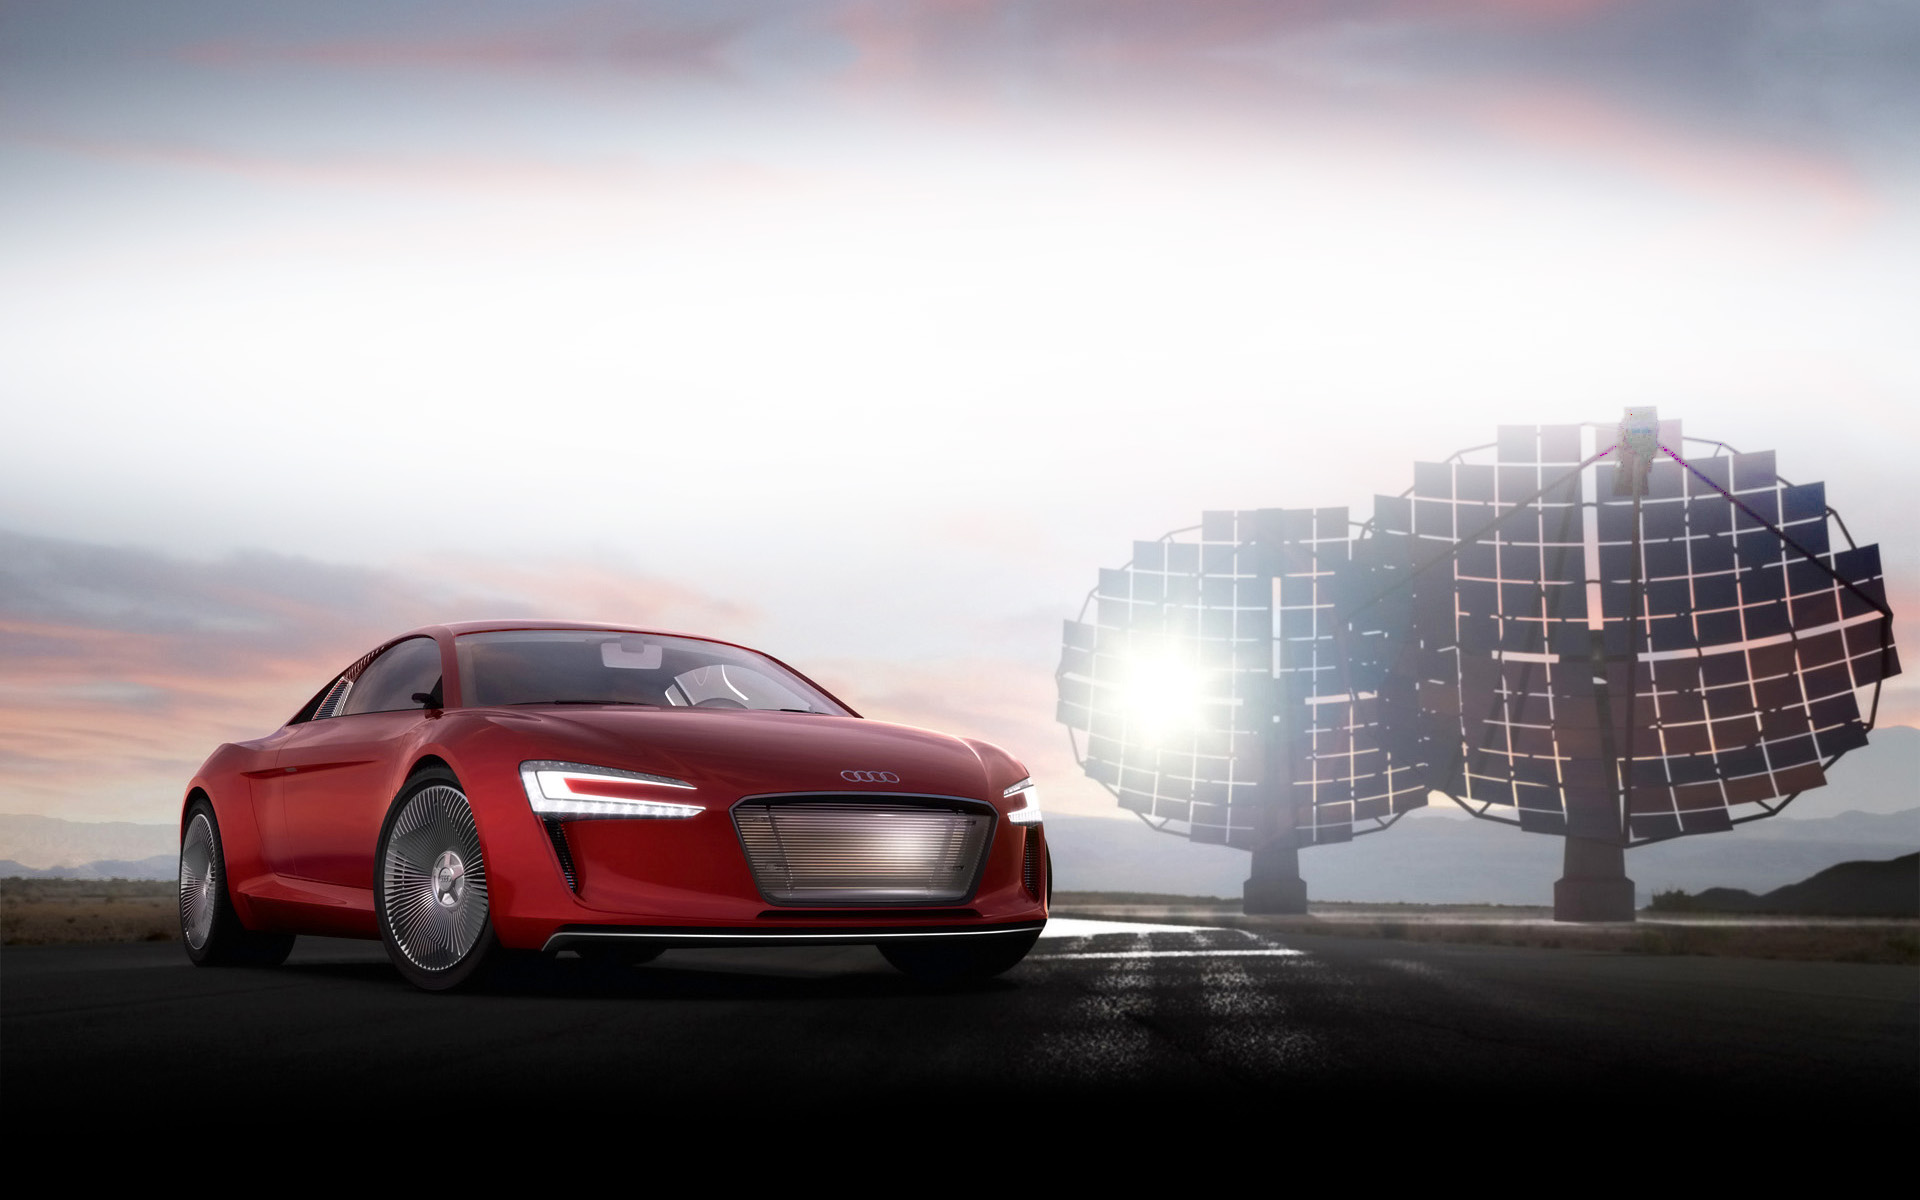  2009 Audi E-Tron Concept Wallpaper.